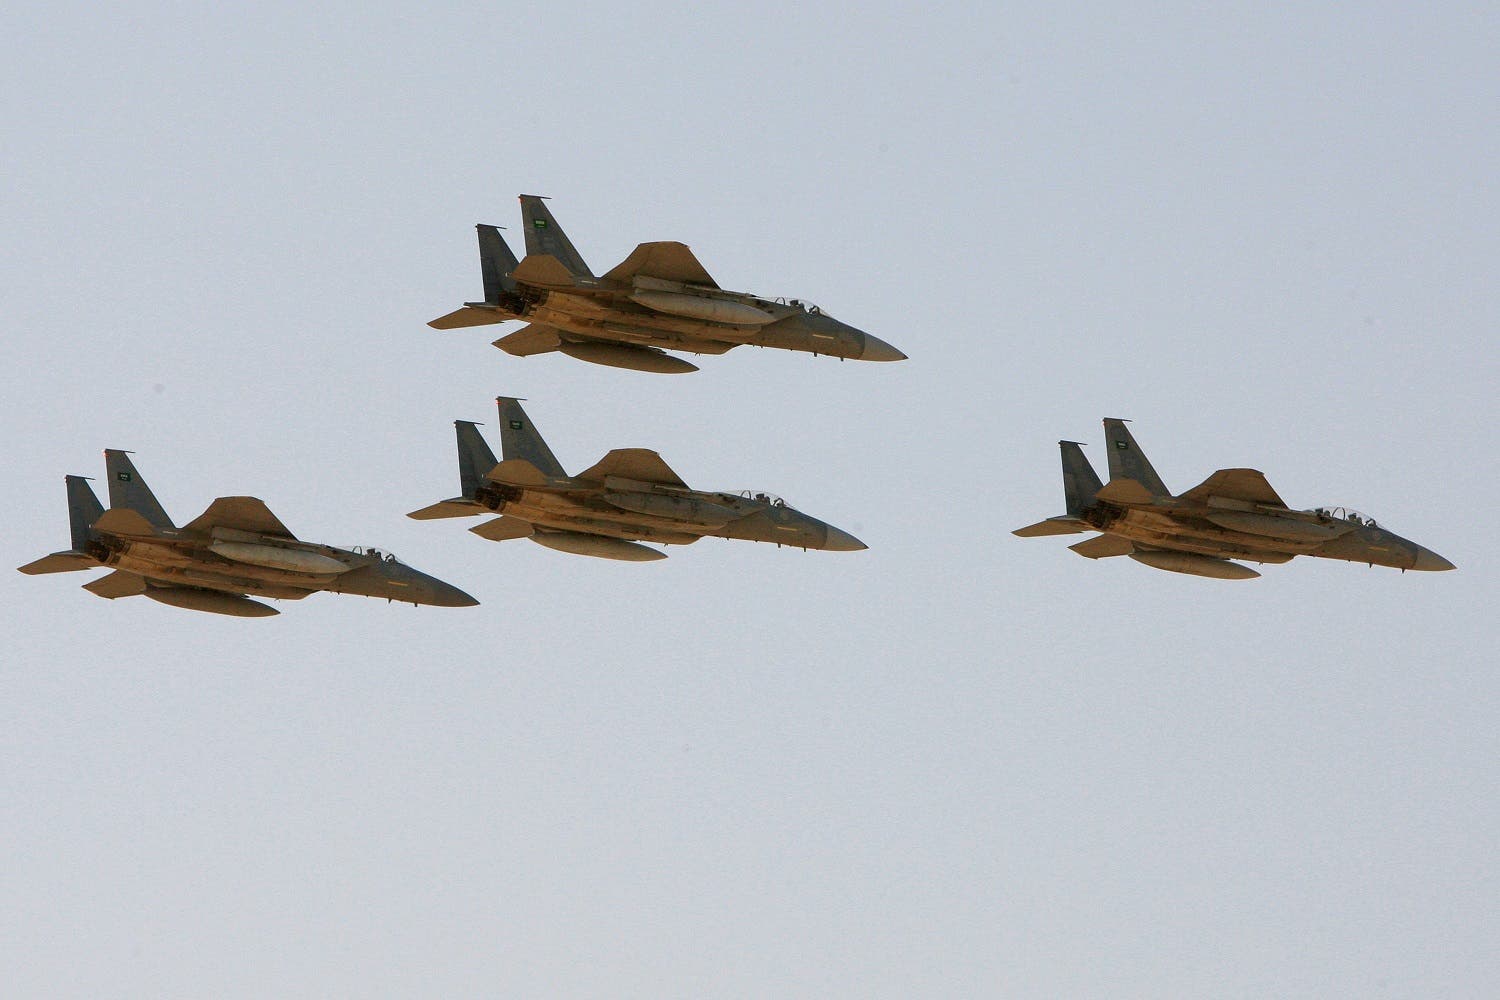 warplanes of the Saudi Air Force fly over the Saudi Arabian capital Riyadh during a graduation ceremony at King Faisal Air Force University. (File photo: AP)